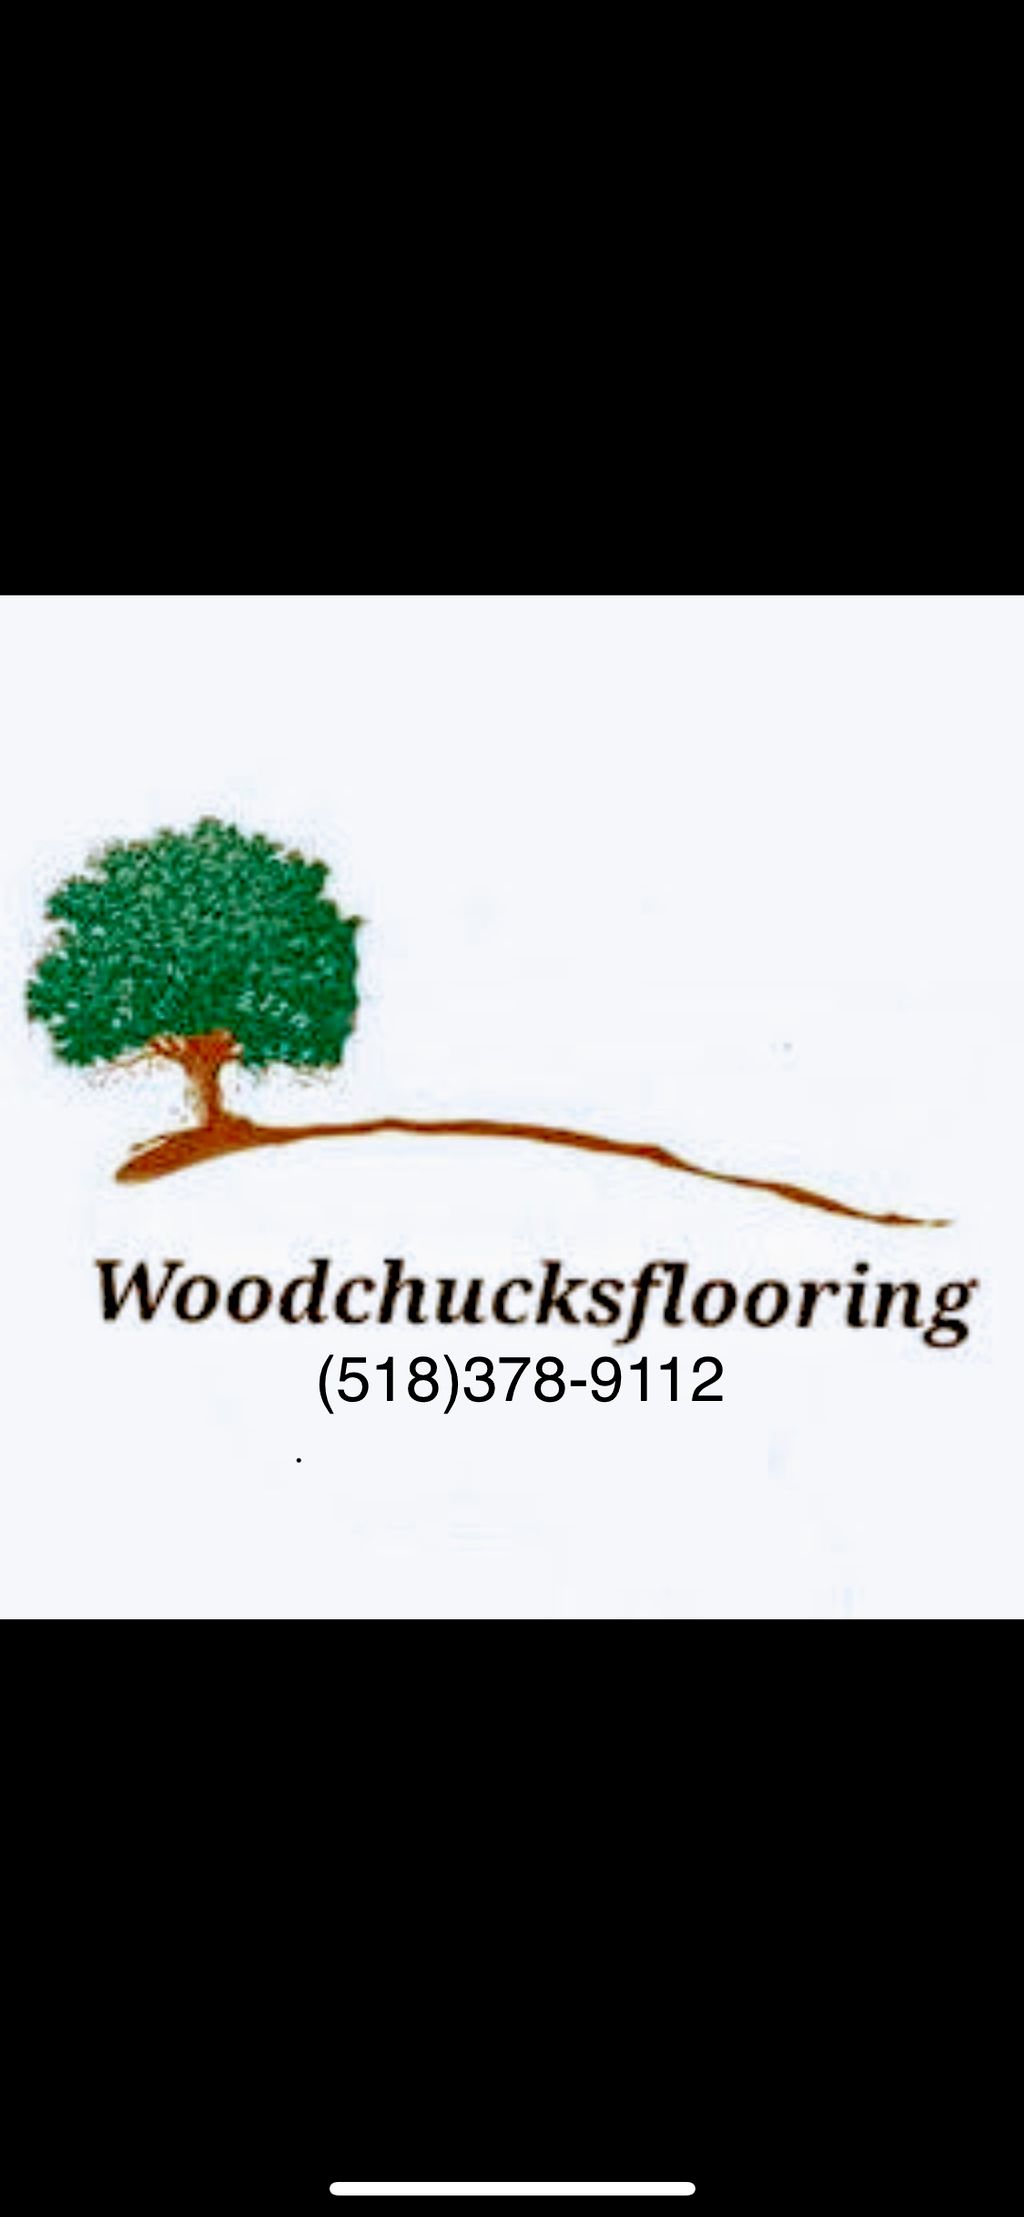 Woodchucks flooring 378-9112